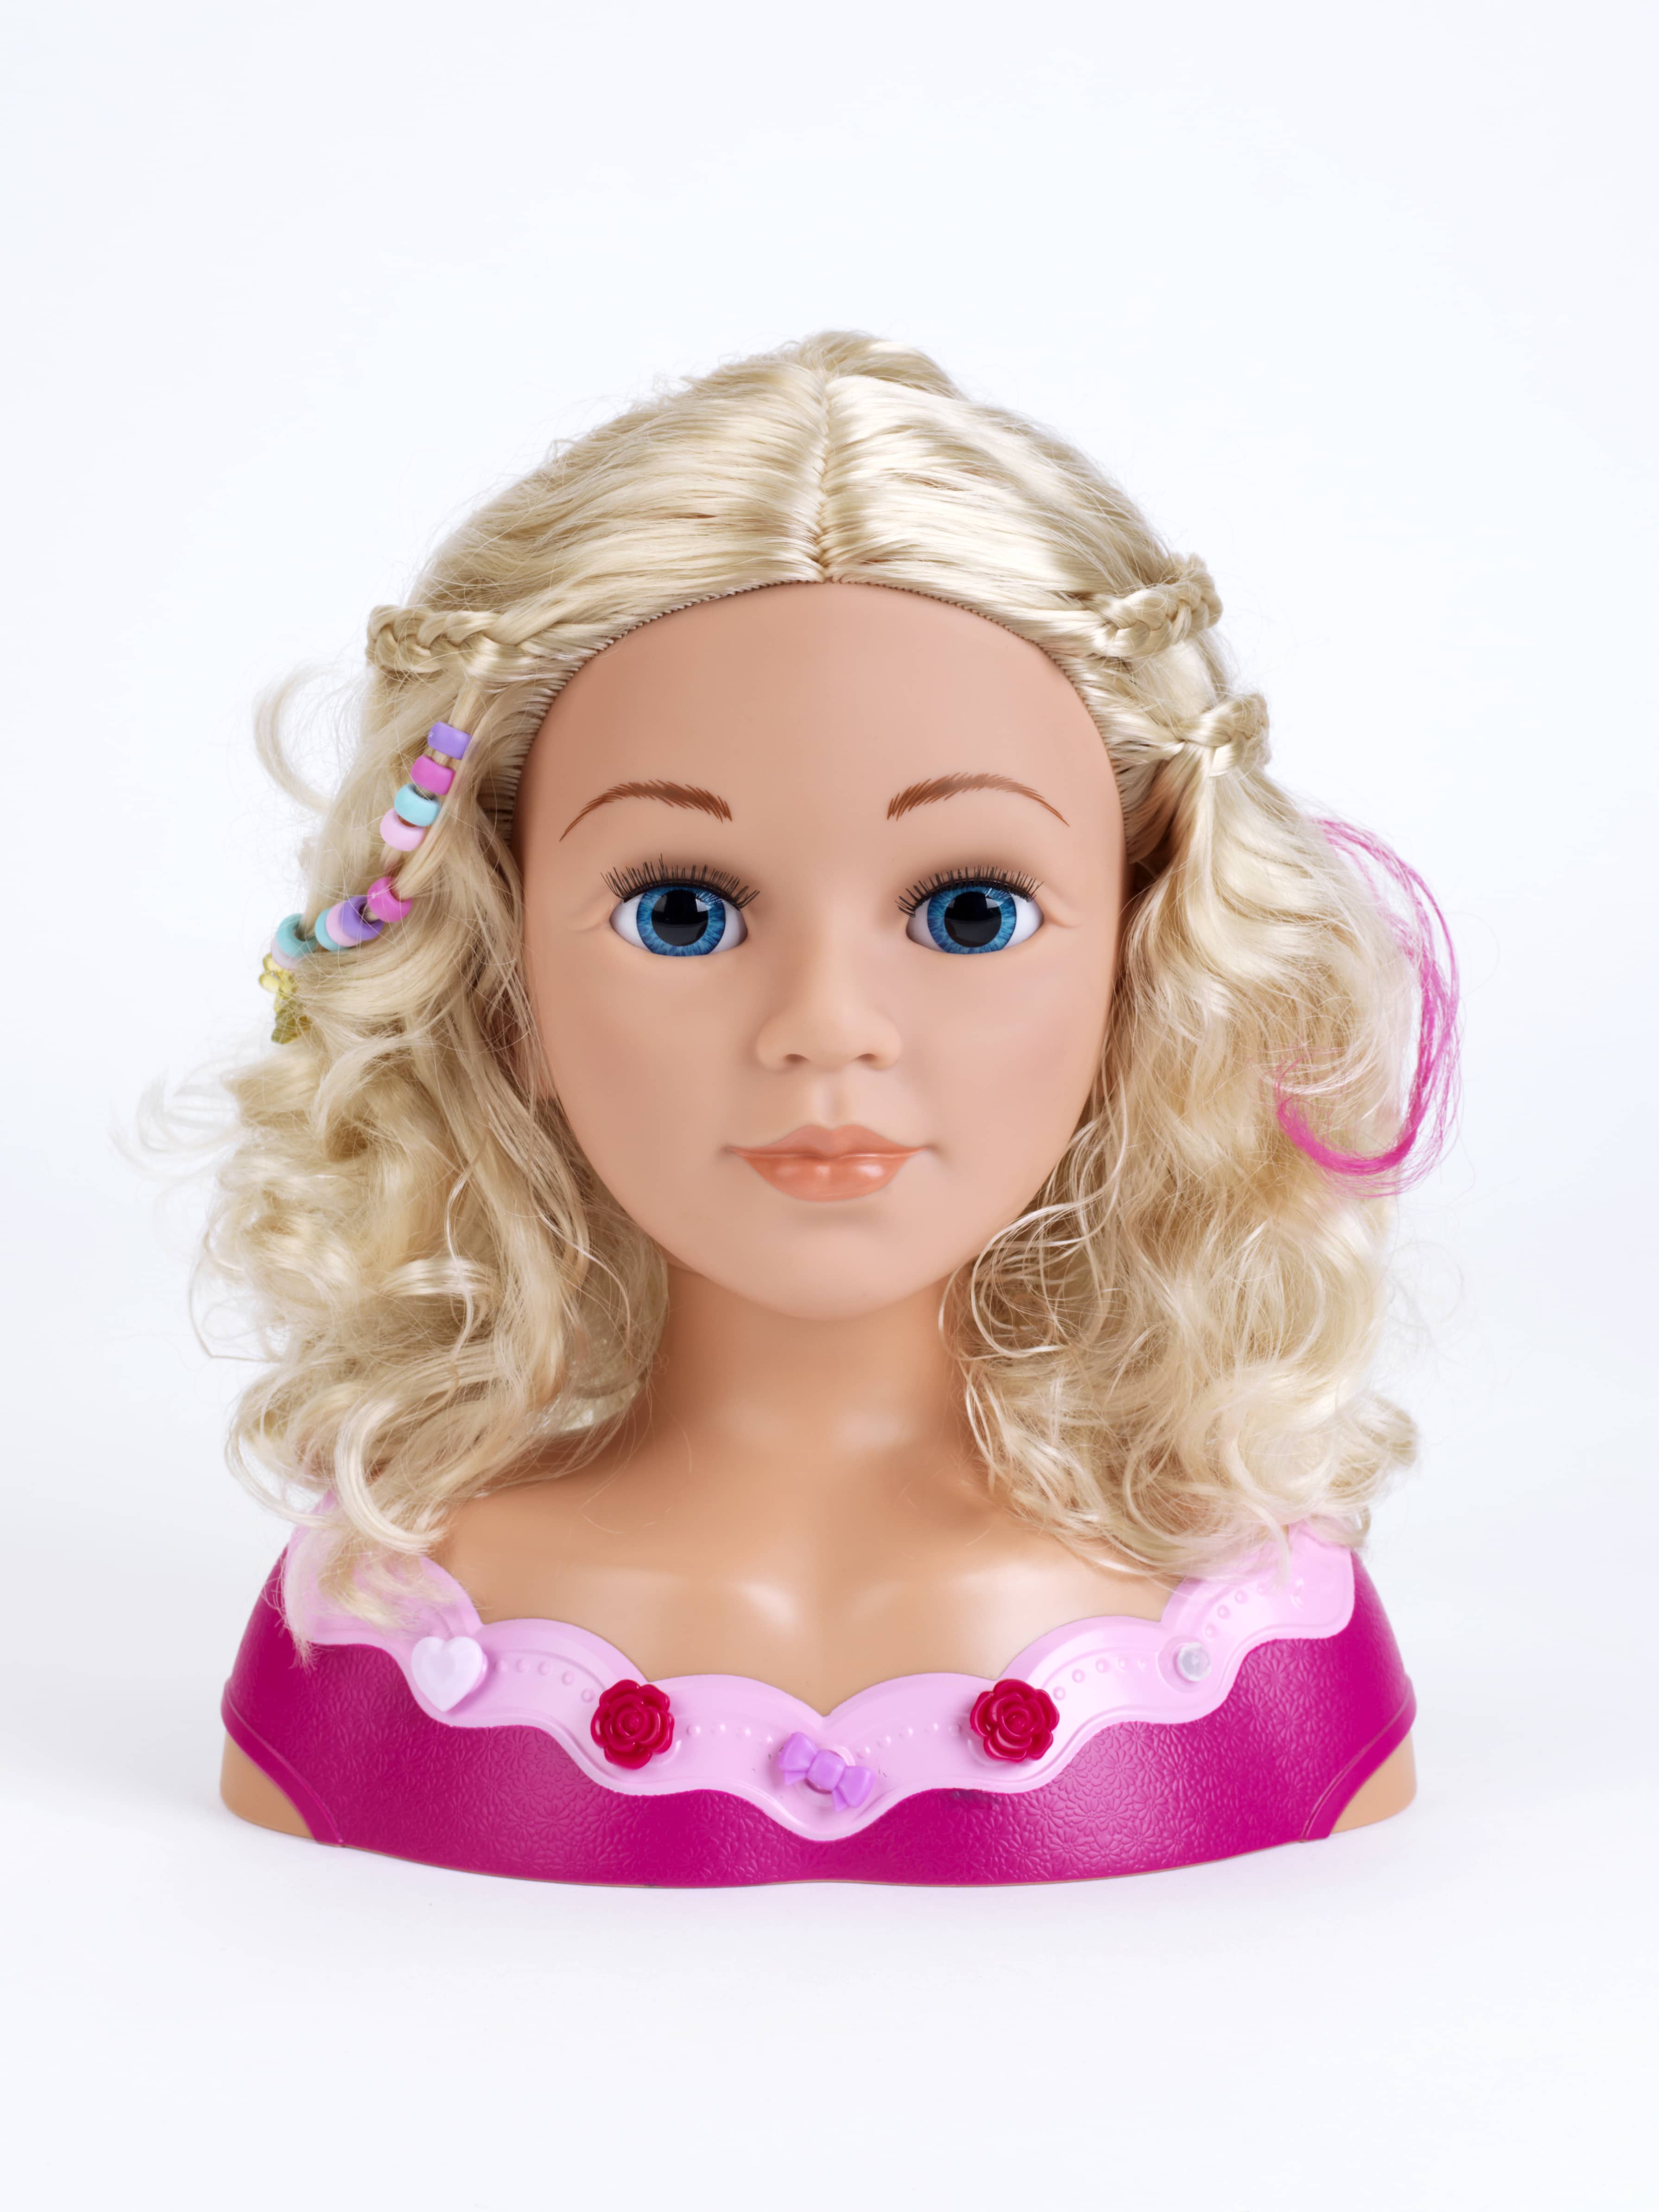 Britains Klein PRINCESS CORALIE MAKE-UP & HAIR STYLING HEAD Girls Pretend Play Toy BN 4009847052360 